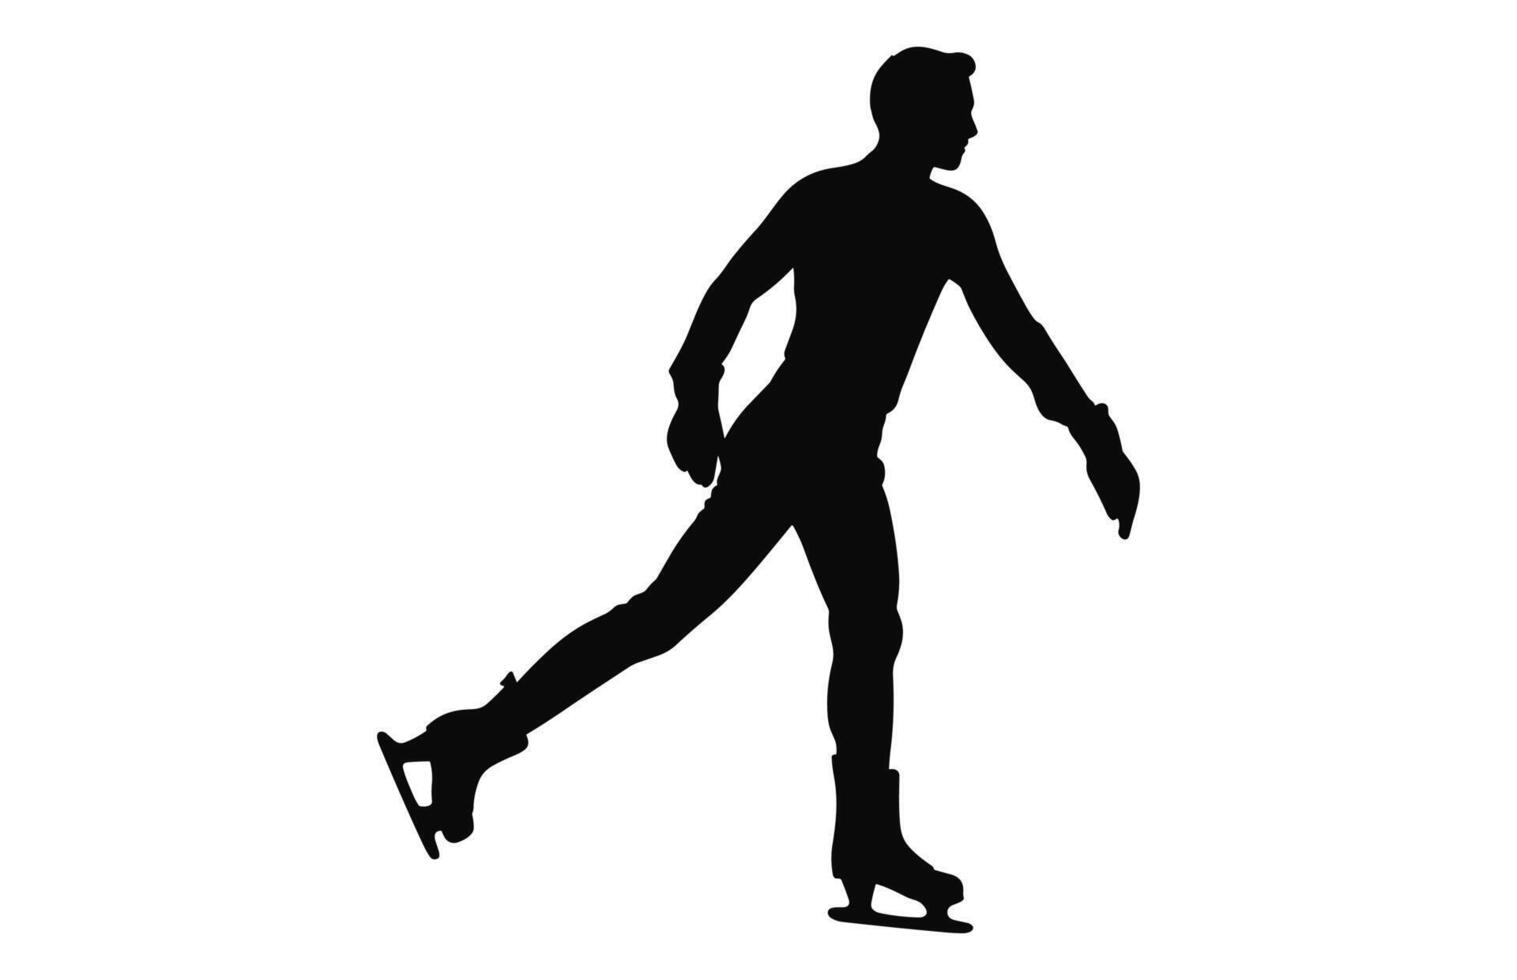 hombre figura hielo Patinaje silueta vector manojo, masculino figura patinador siluetas negro clipart conjunto